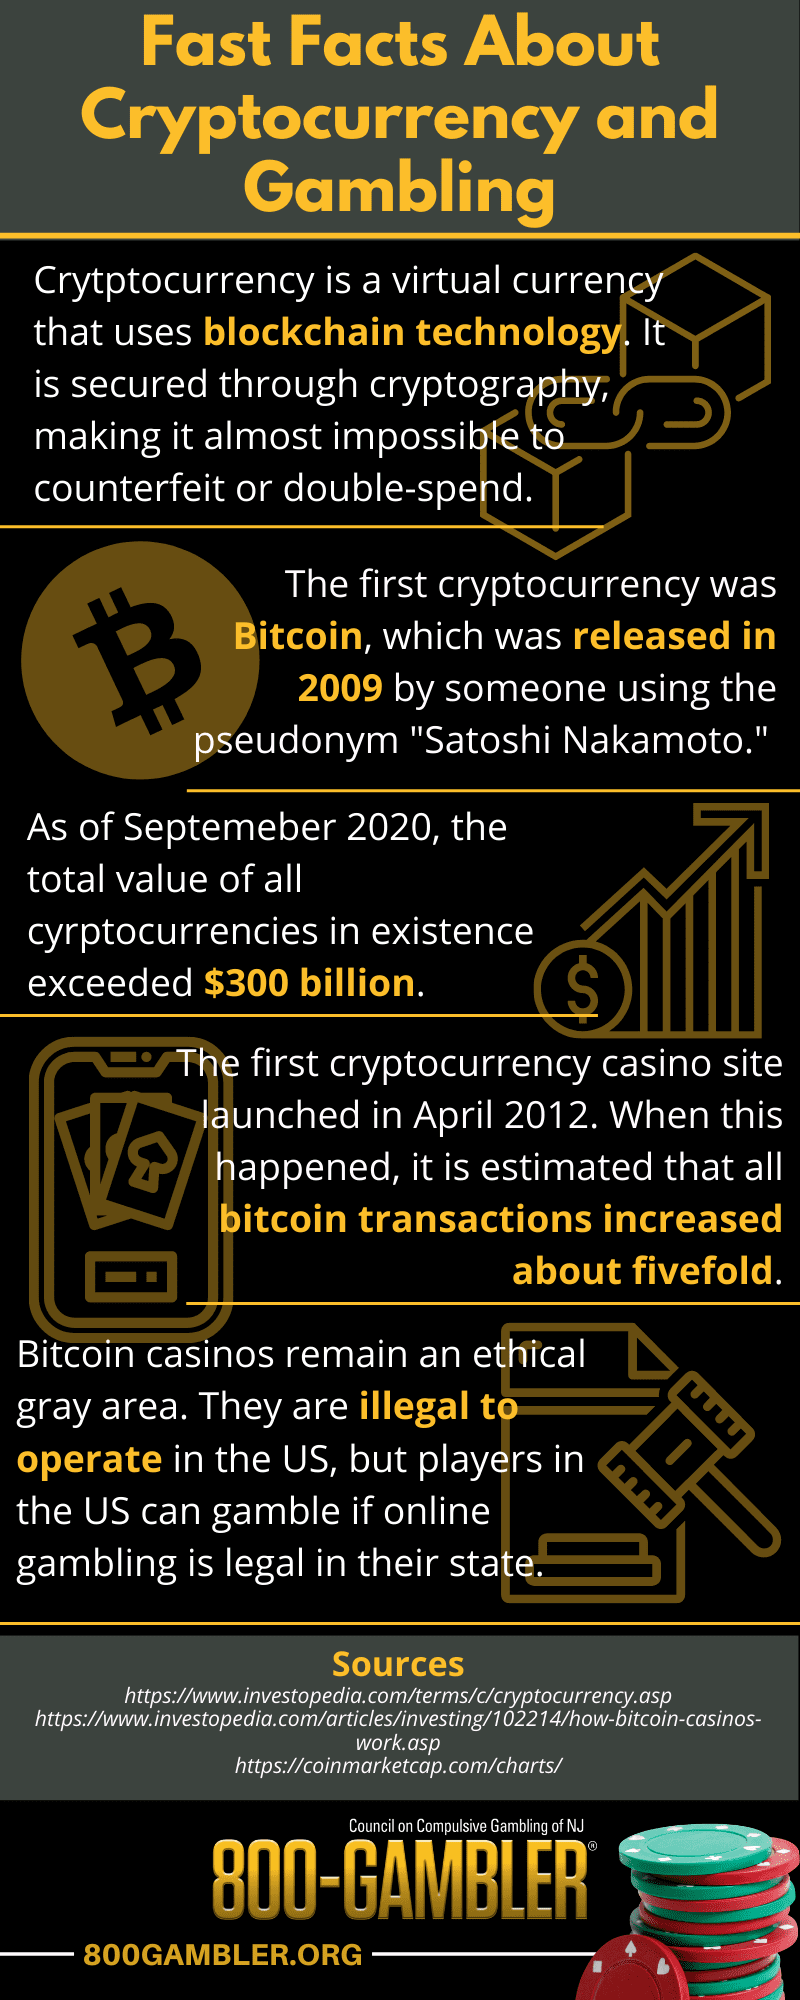 Extreme bitcoin casino sites